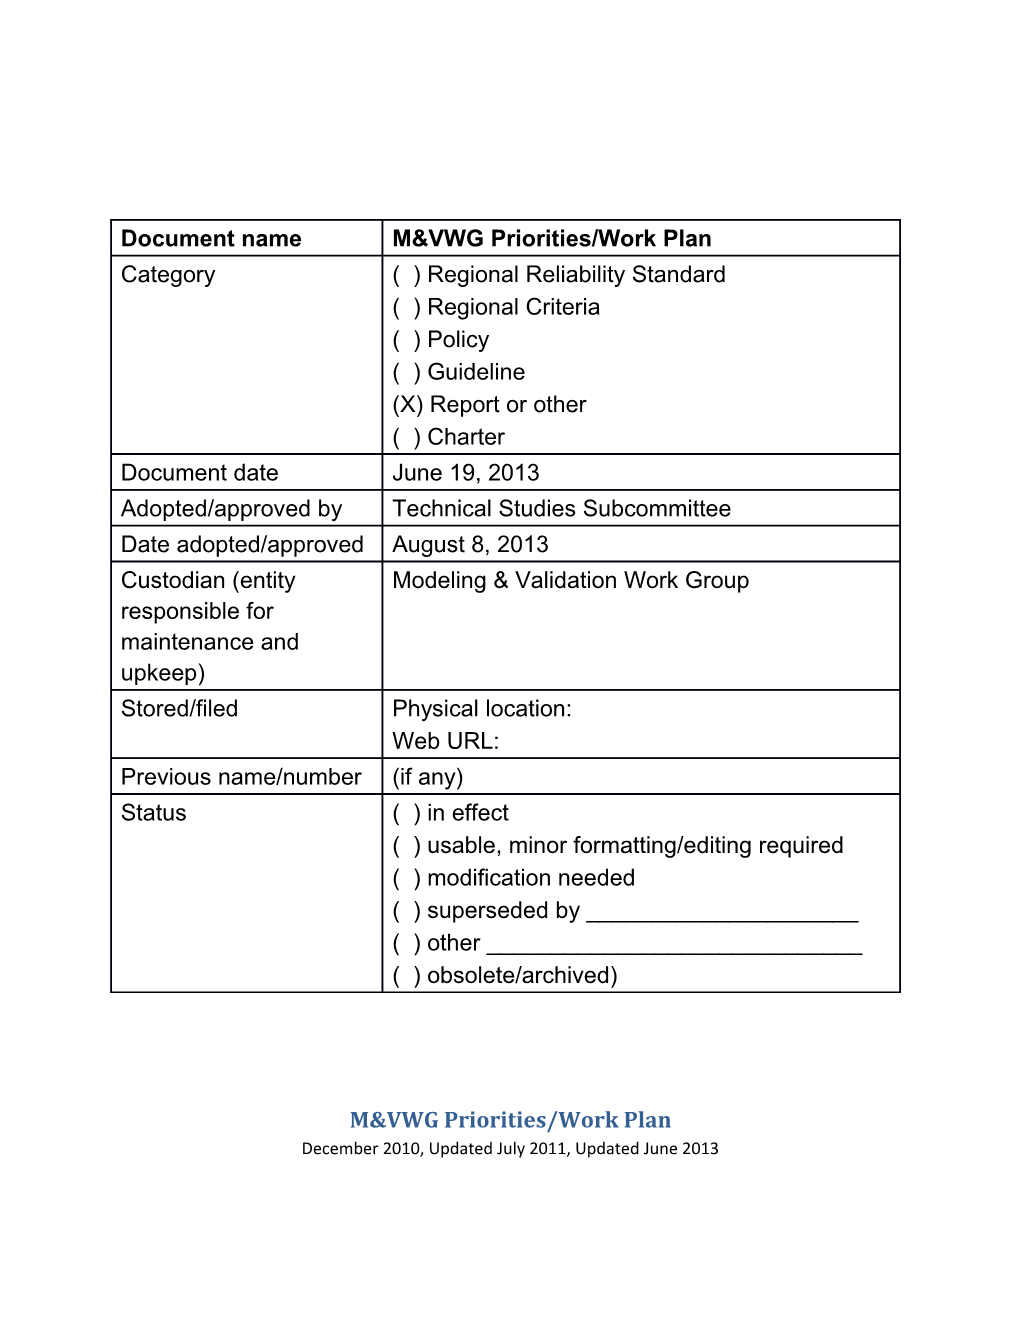 2013 MVWG Priorities and Work Plan